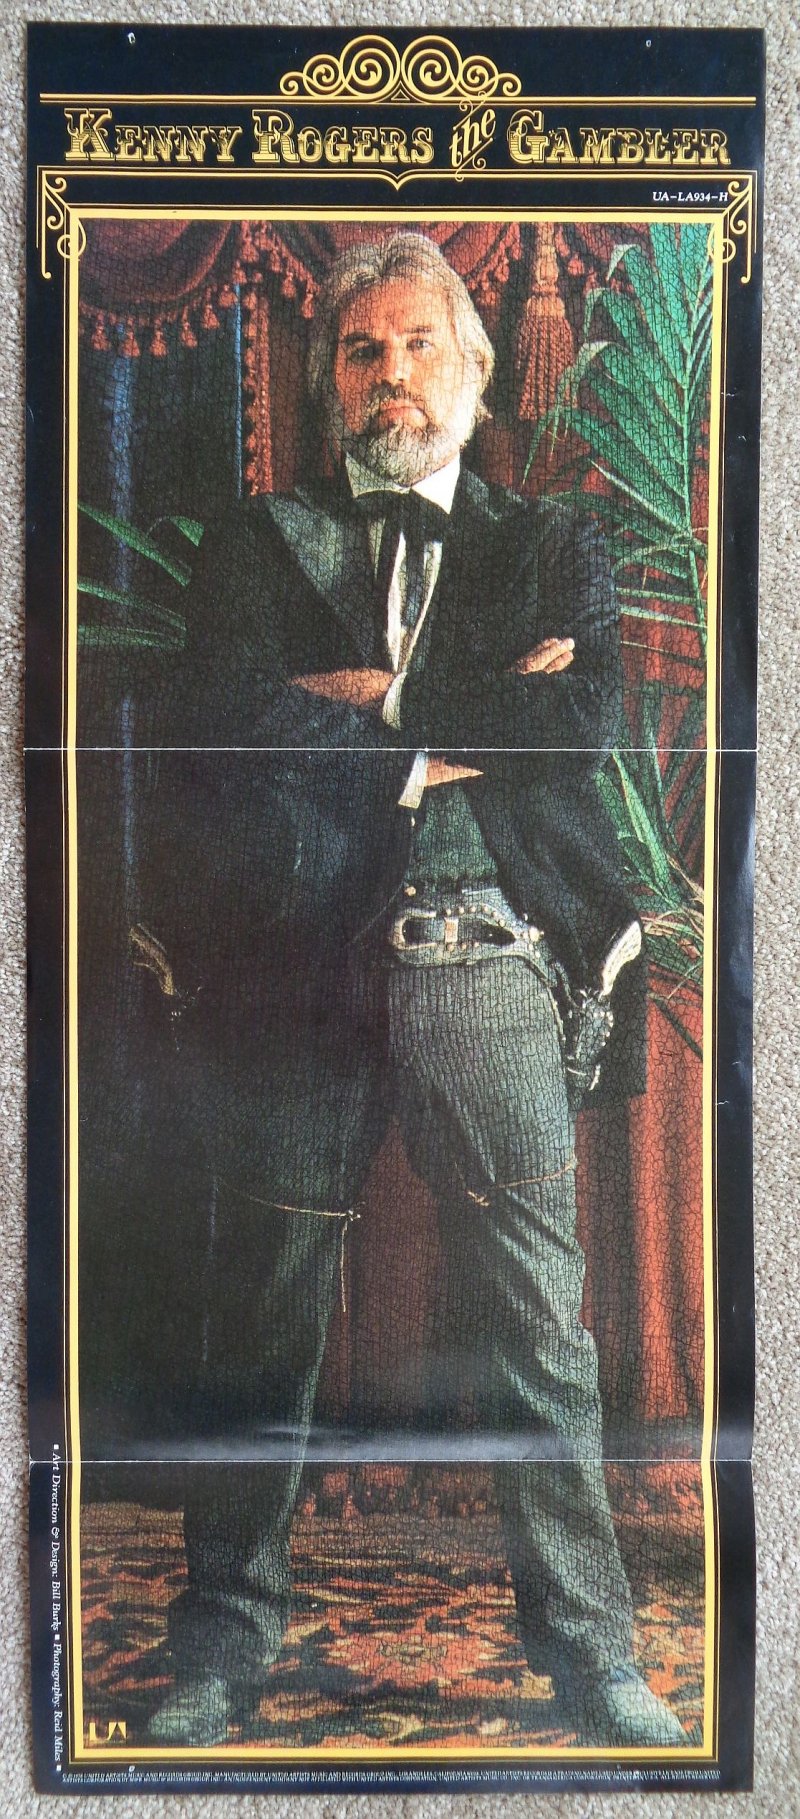 Rogers KENNY ROGERS 1978 Album POSTER The Gambler 28 x 11 1/2